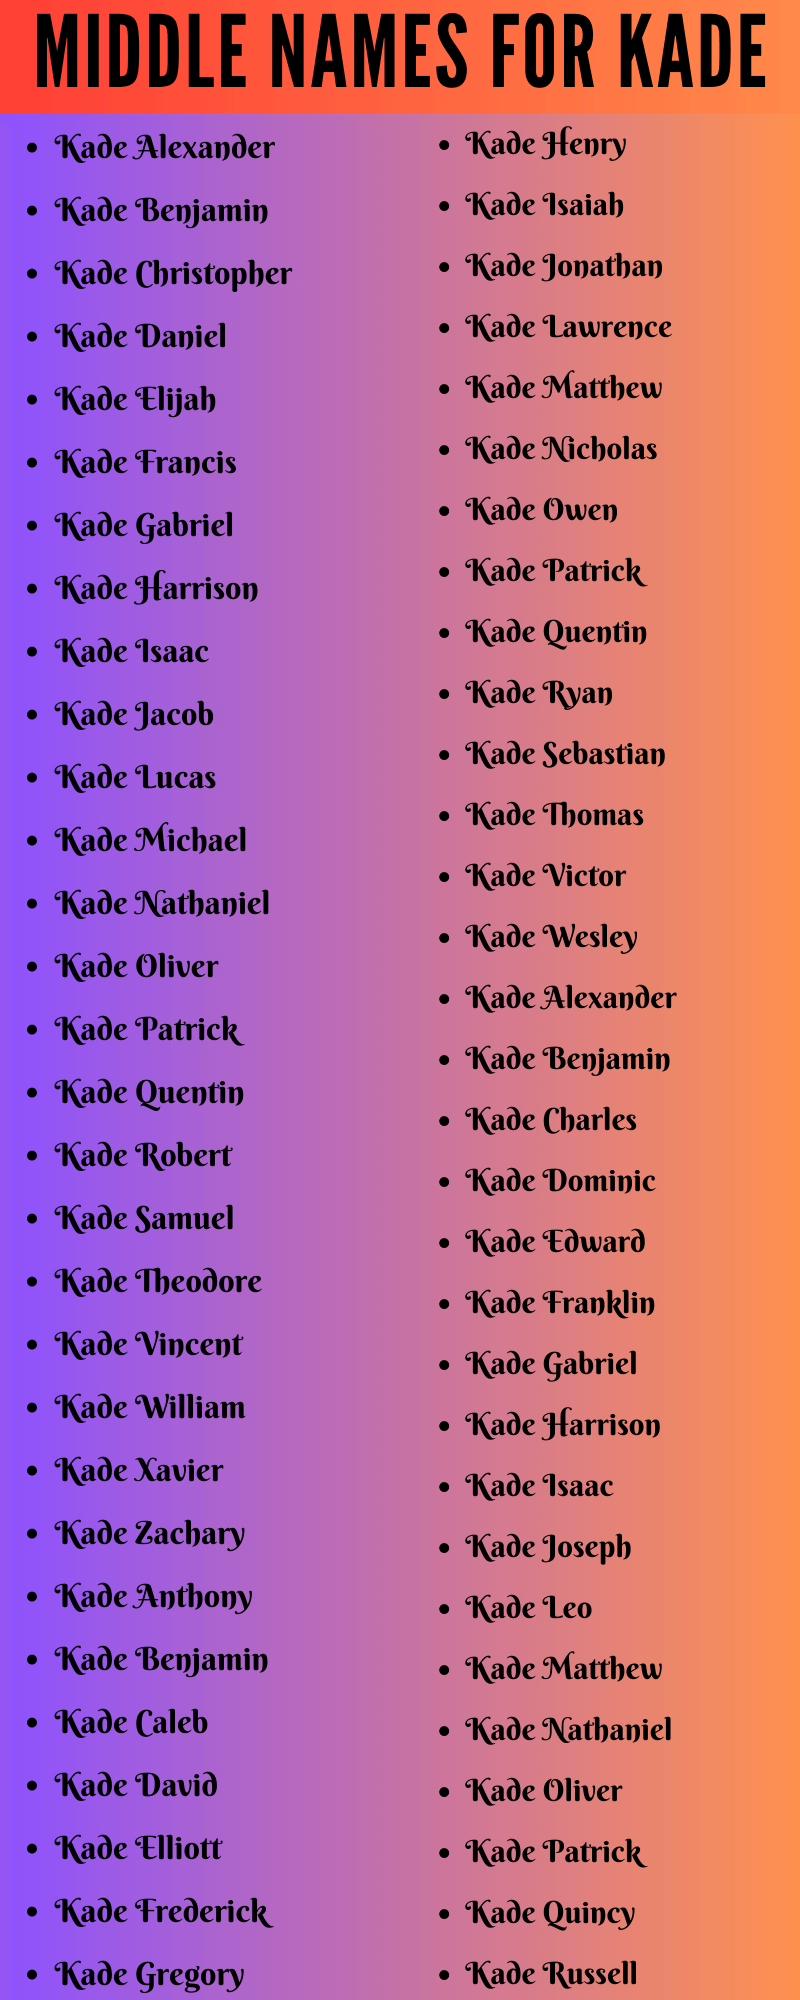 400 Creative Middle Names For Kade